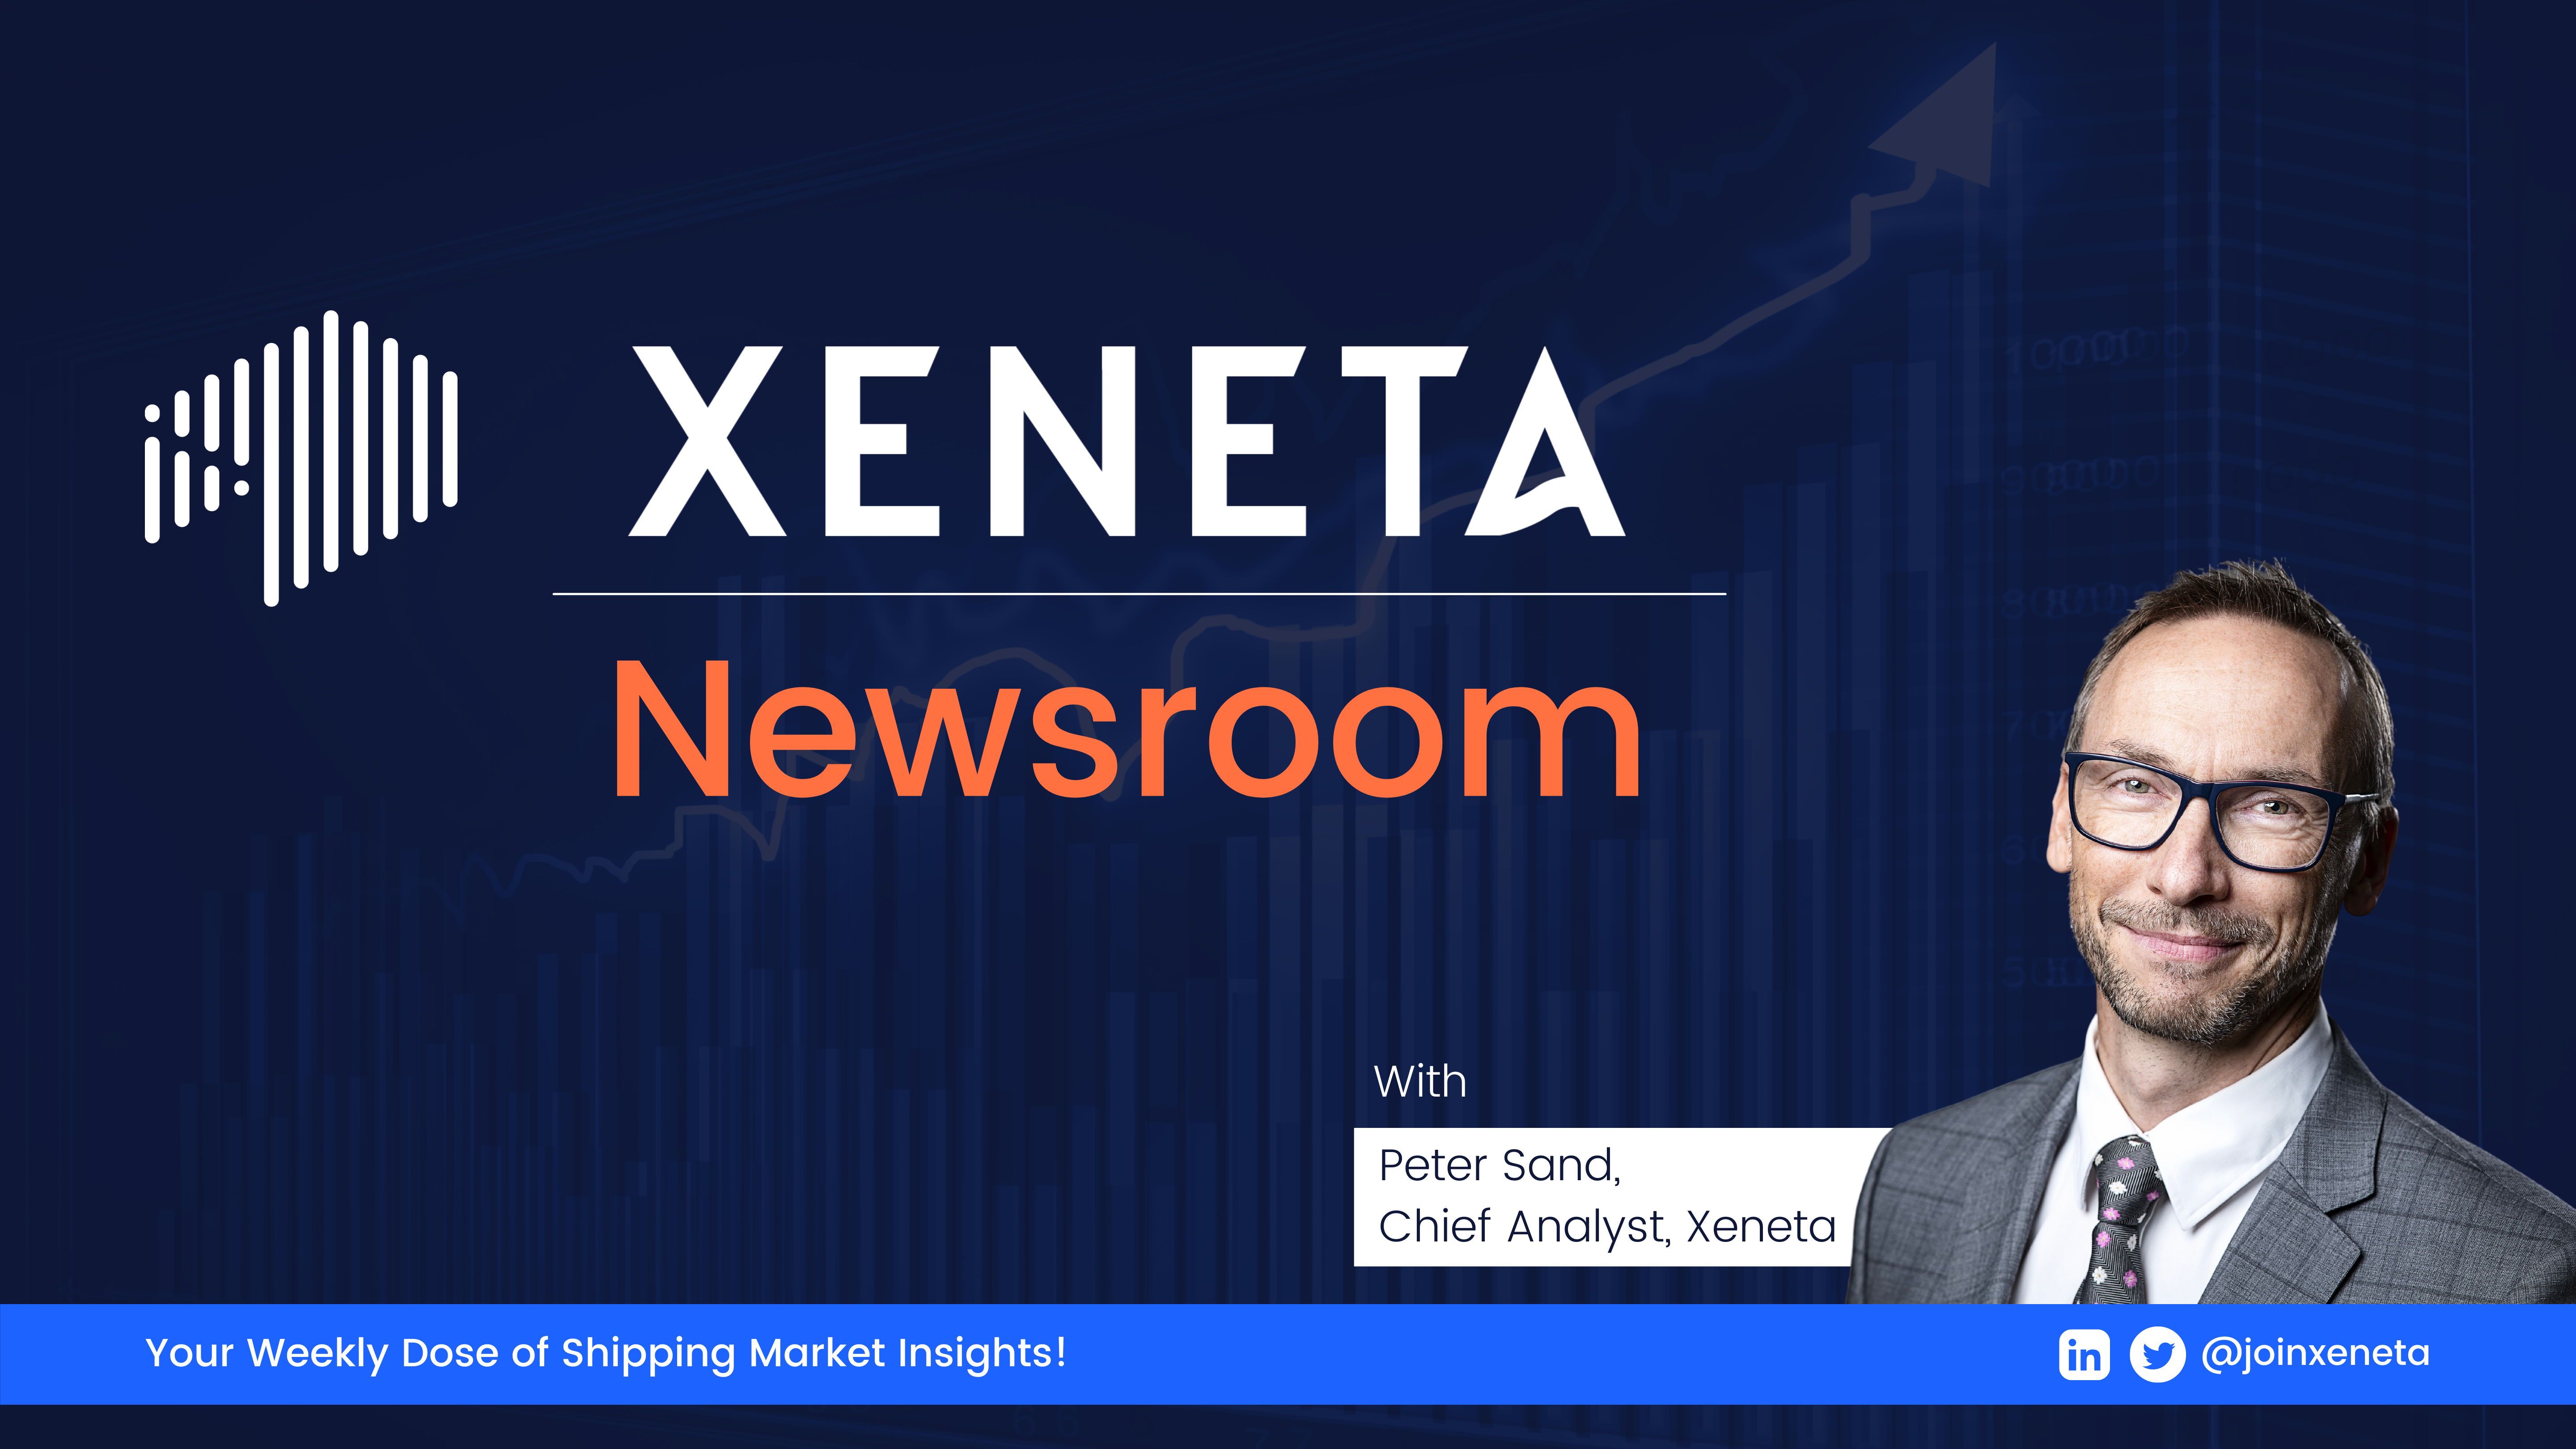 Xeneta Newsroom - April 28, 2022